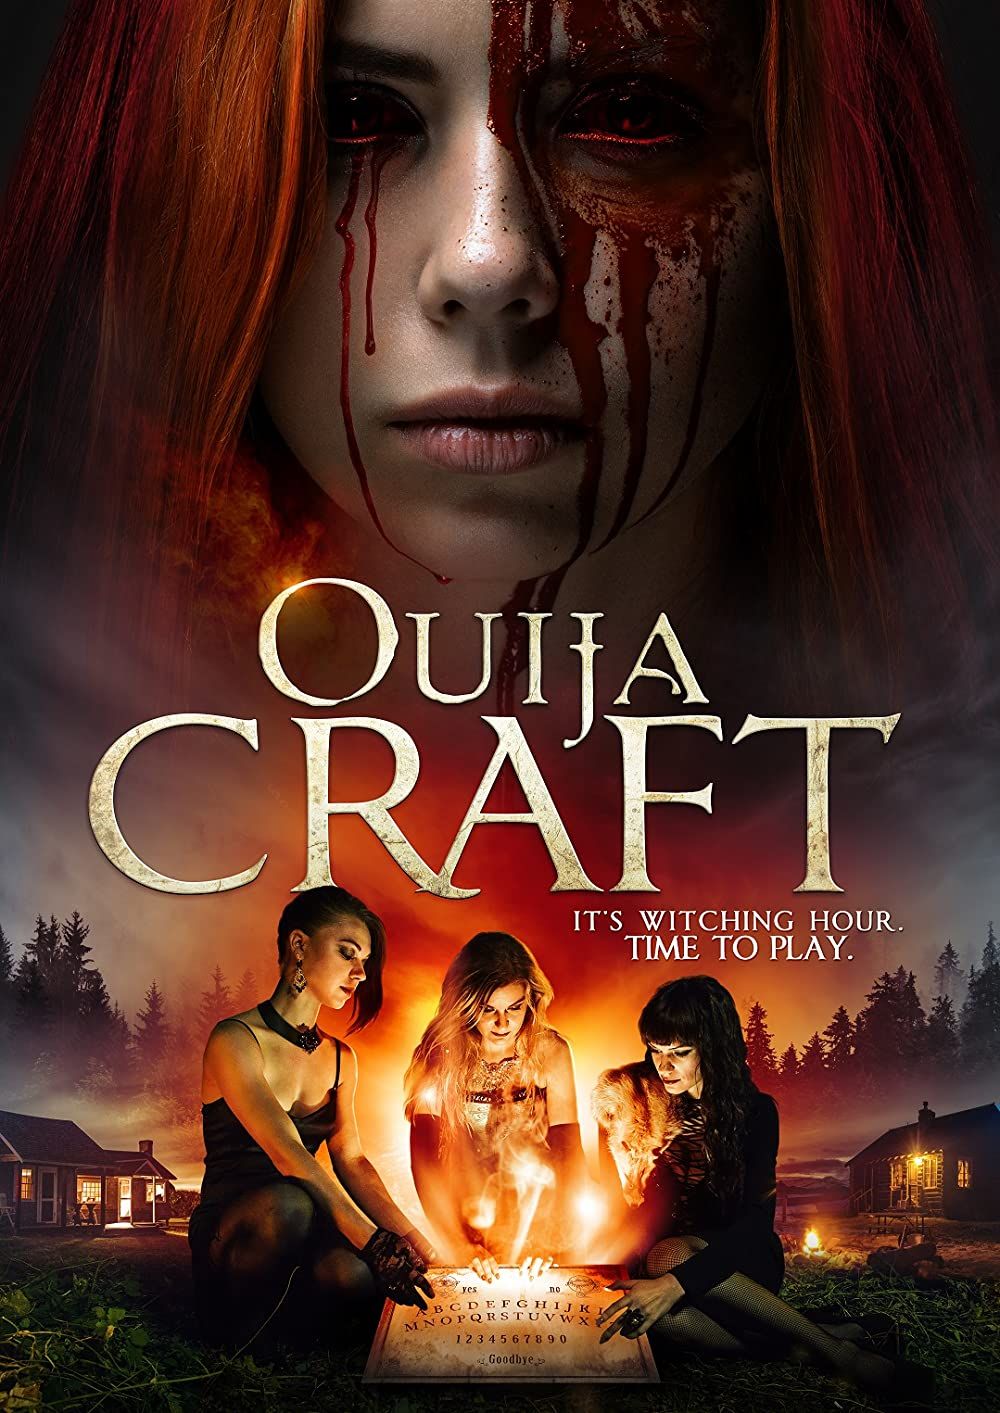 Ouija Craft (2020) Hindi Dubbed HDRip download full movie